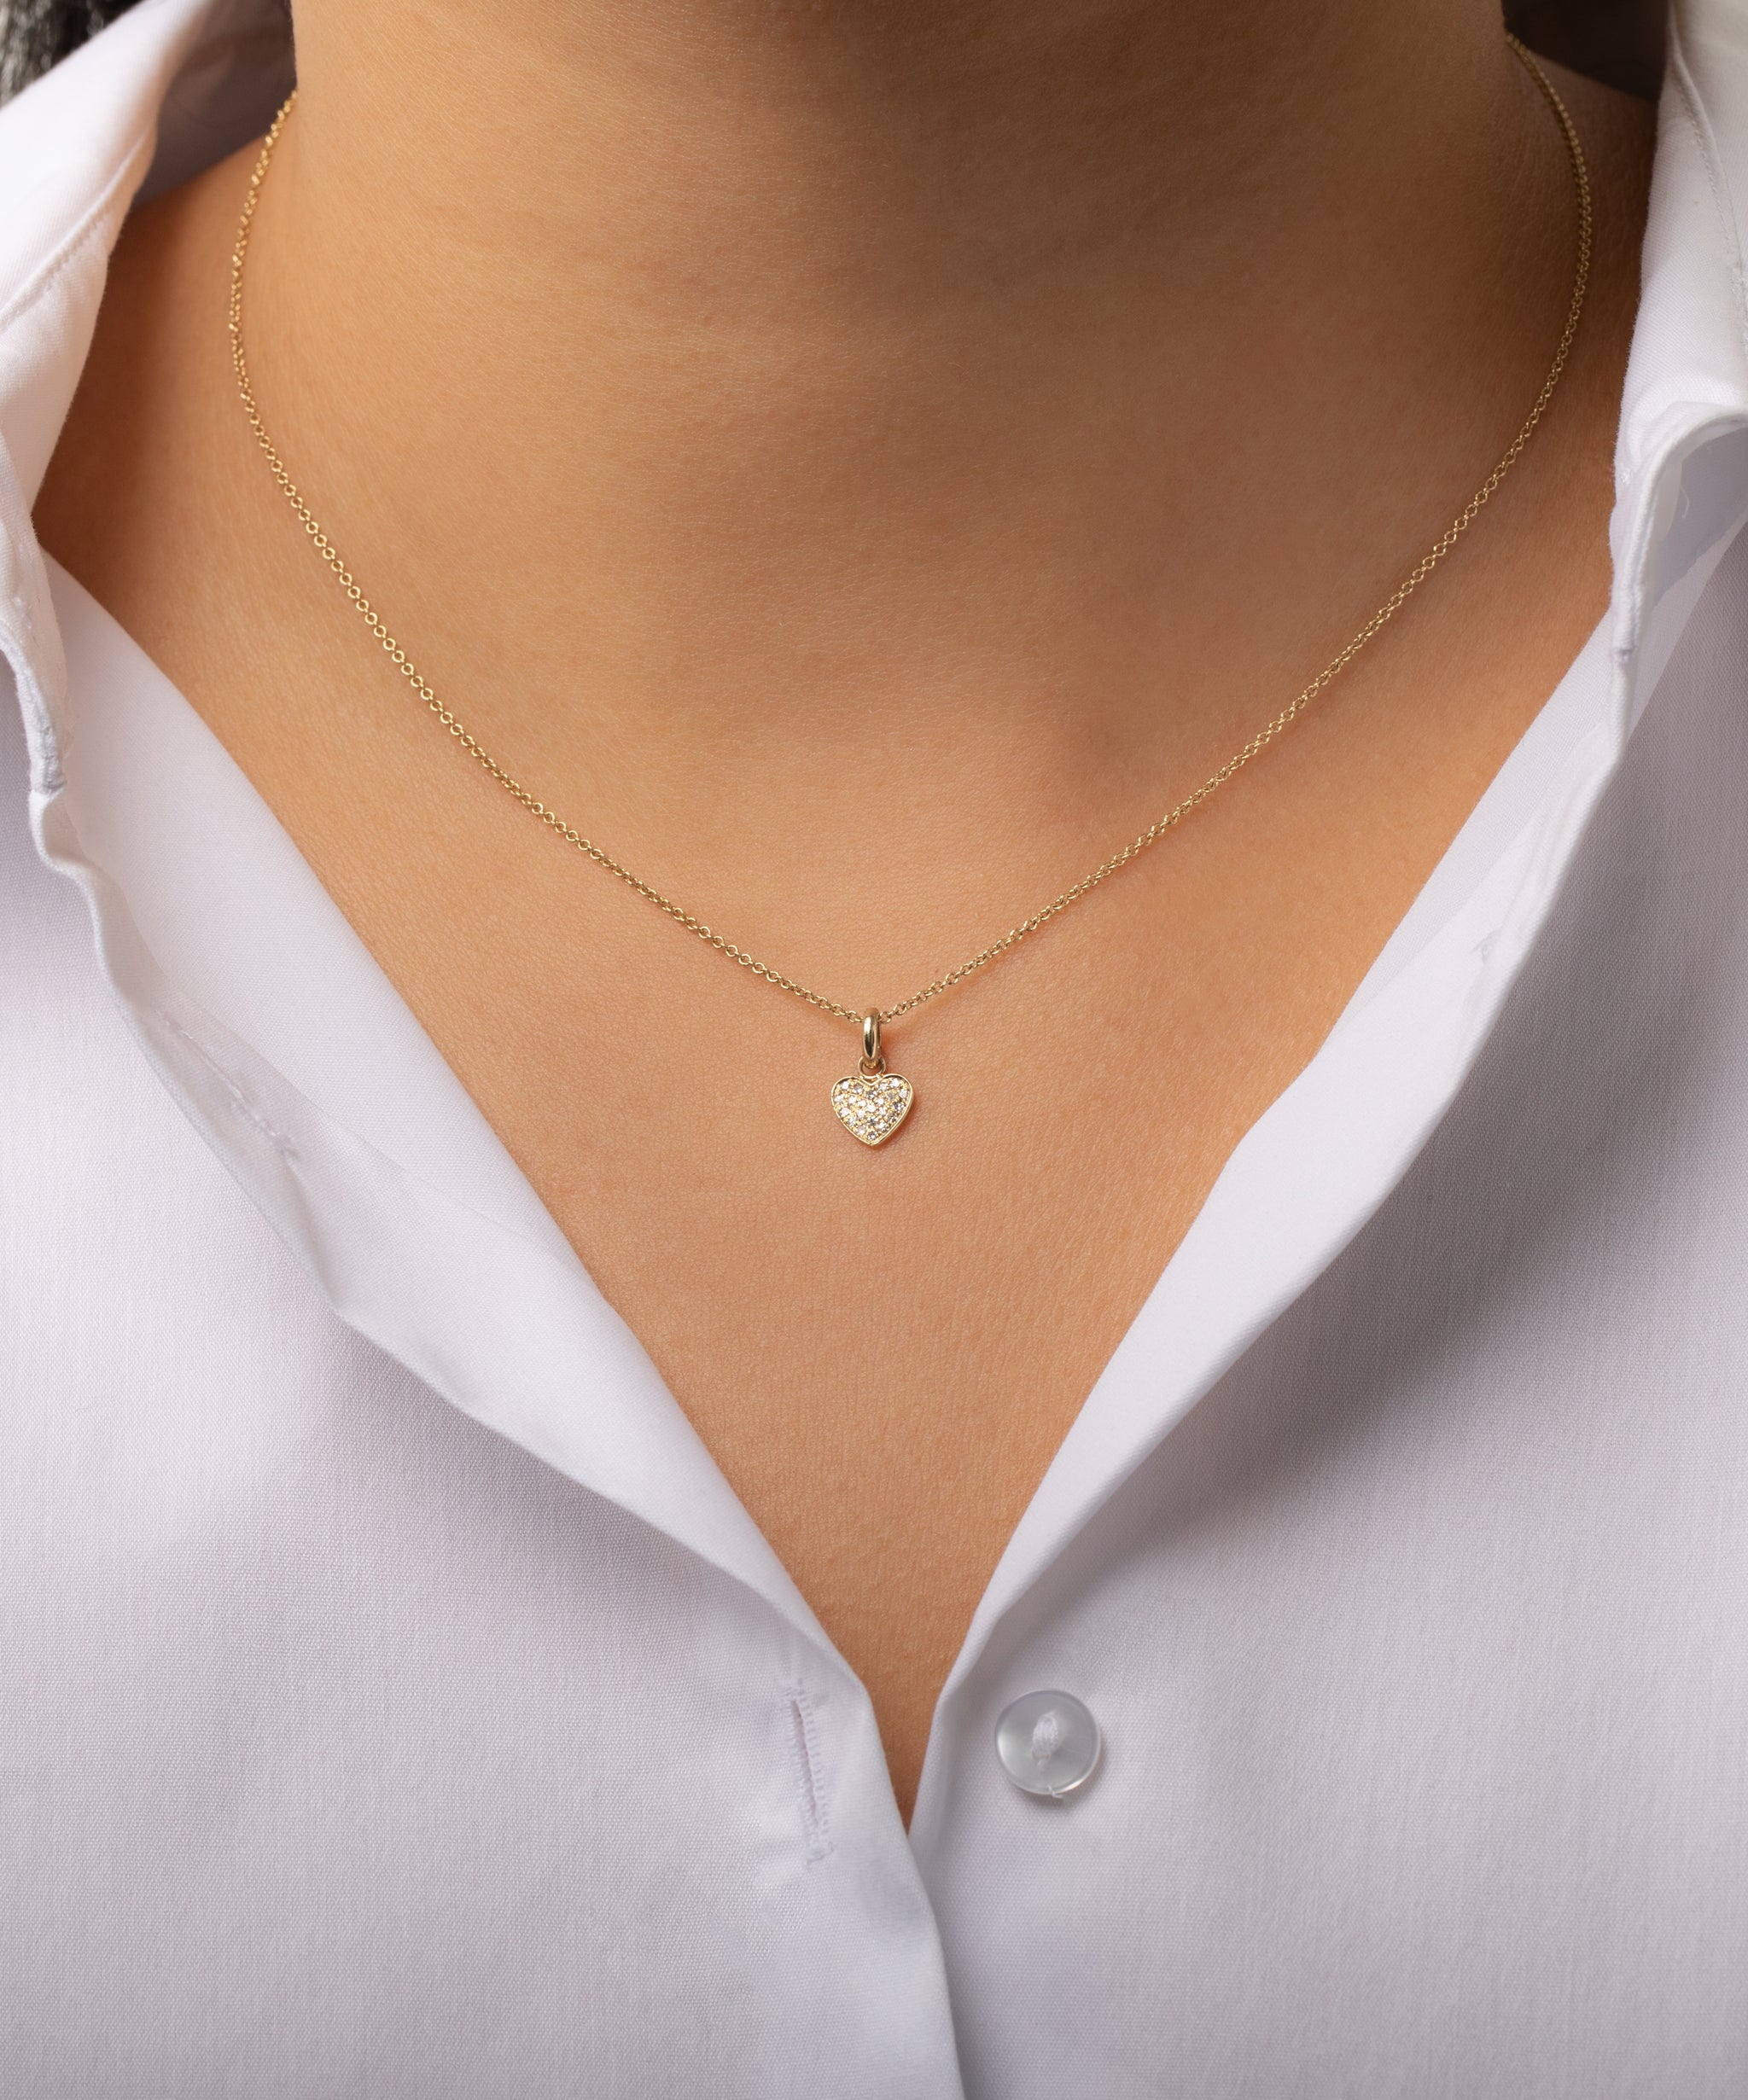 CRB7221600 - Symbols necklace - White gold, diamond - Cartier